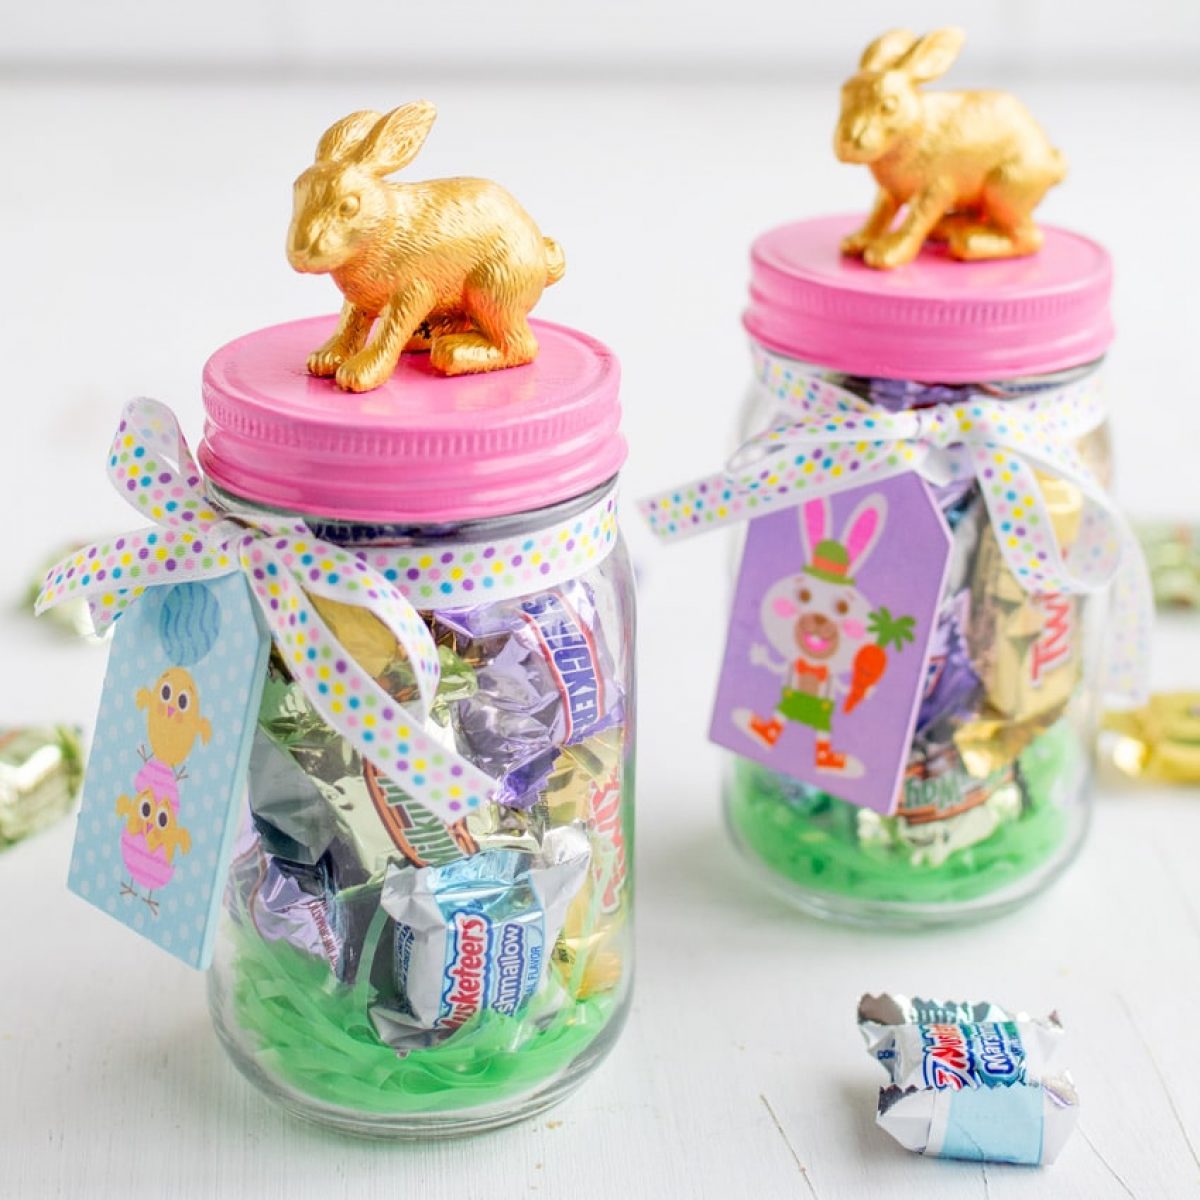 Easter bunny mason jars are a cute, DIY Easter decor idea.